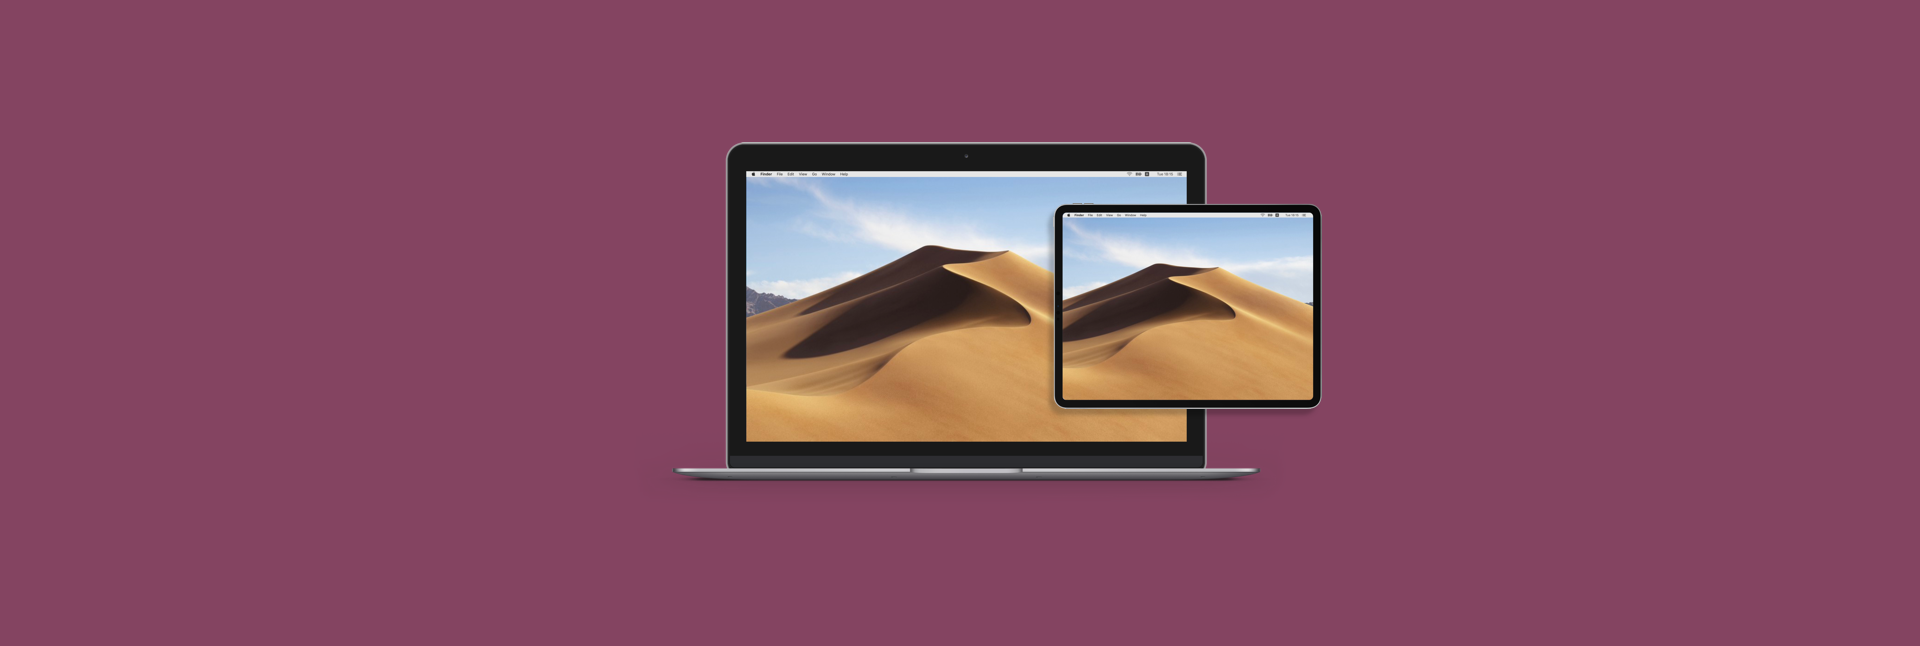 mac pro 2016 input for mac monitor